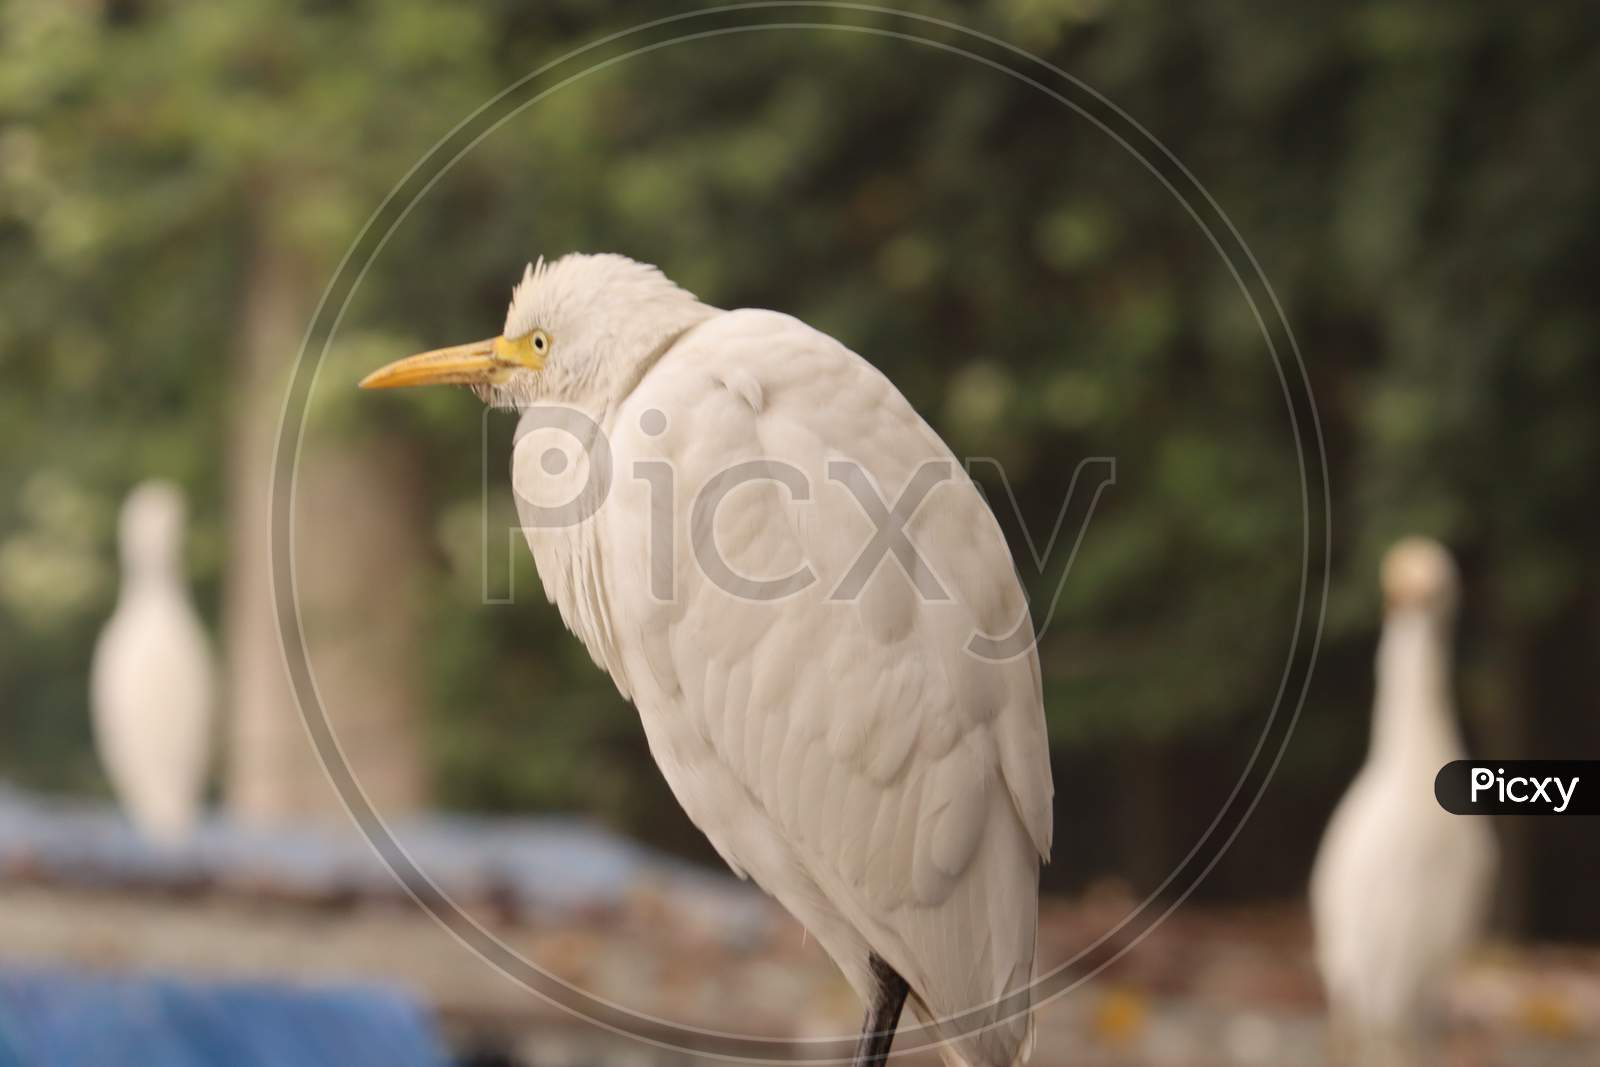 Great Egret bird, Stock image,